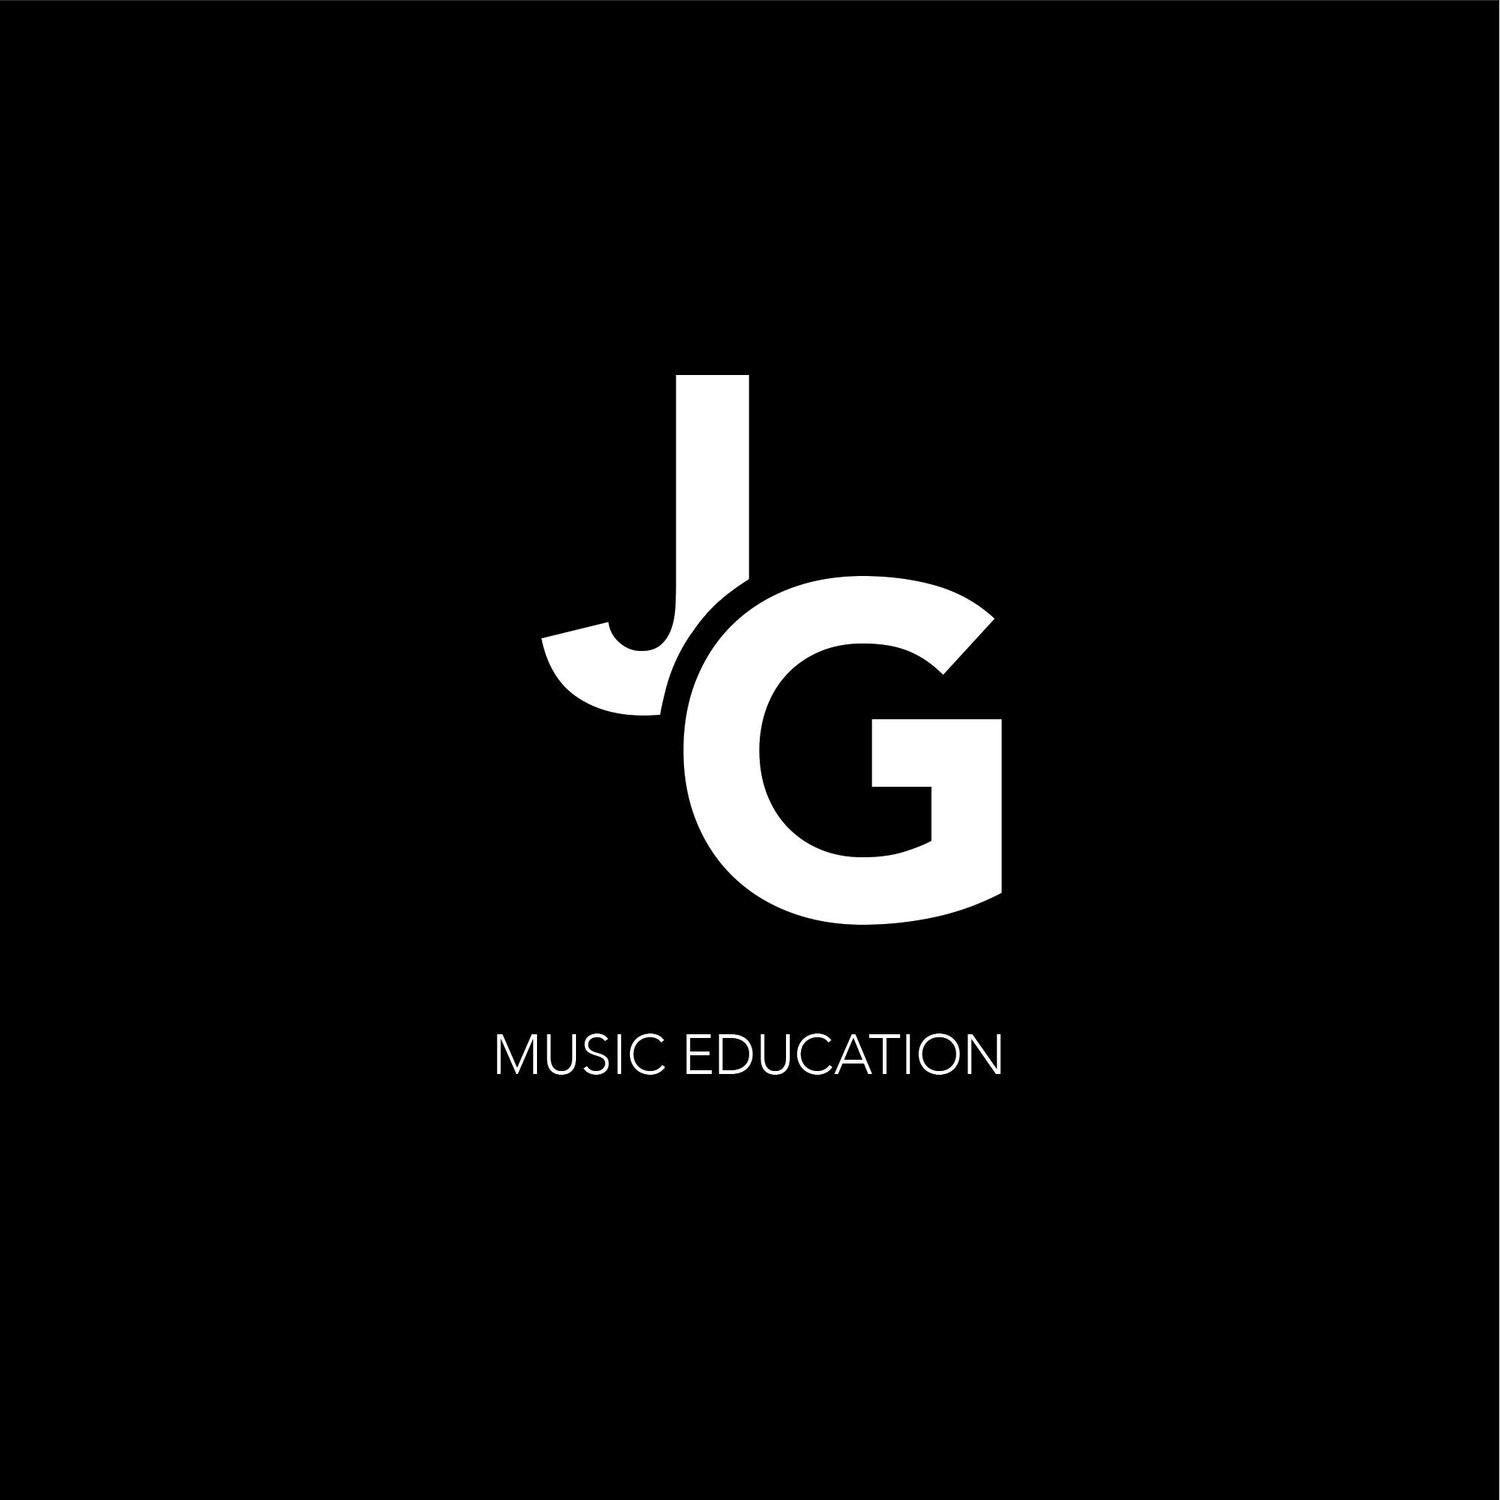 JG Music Education